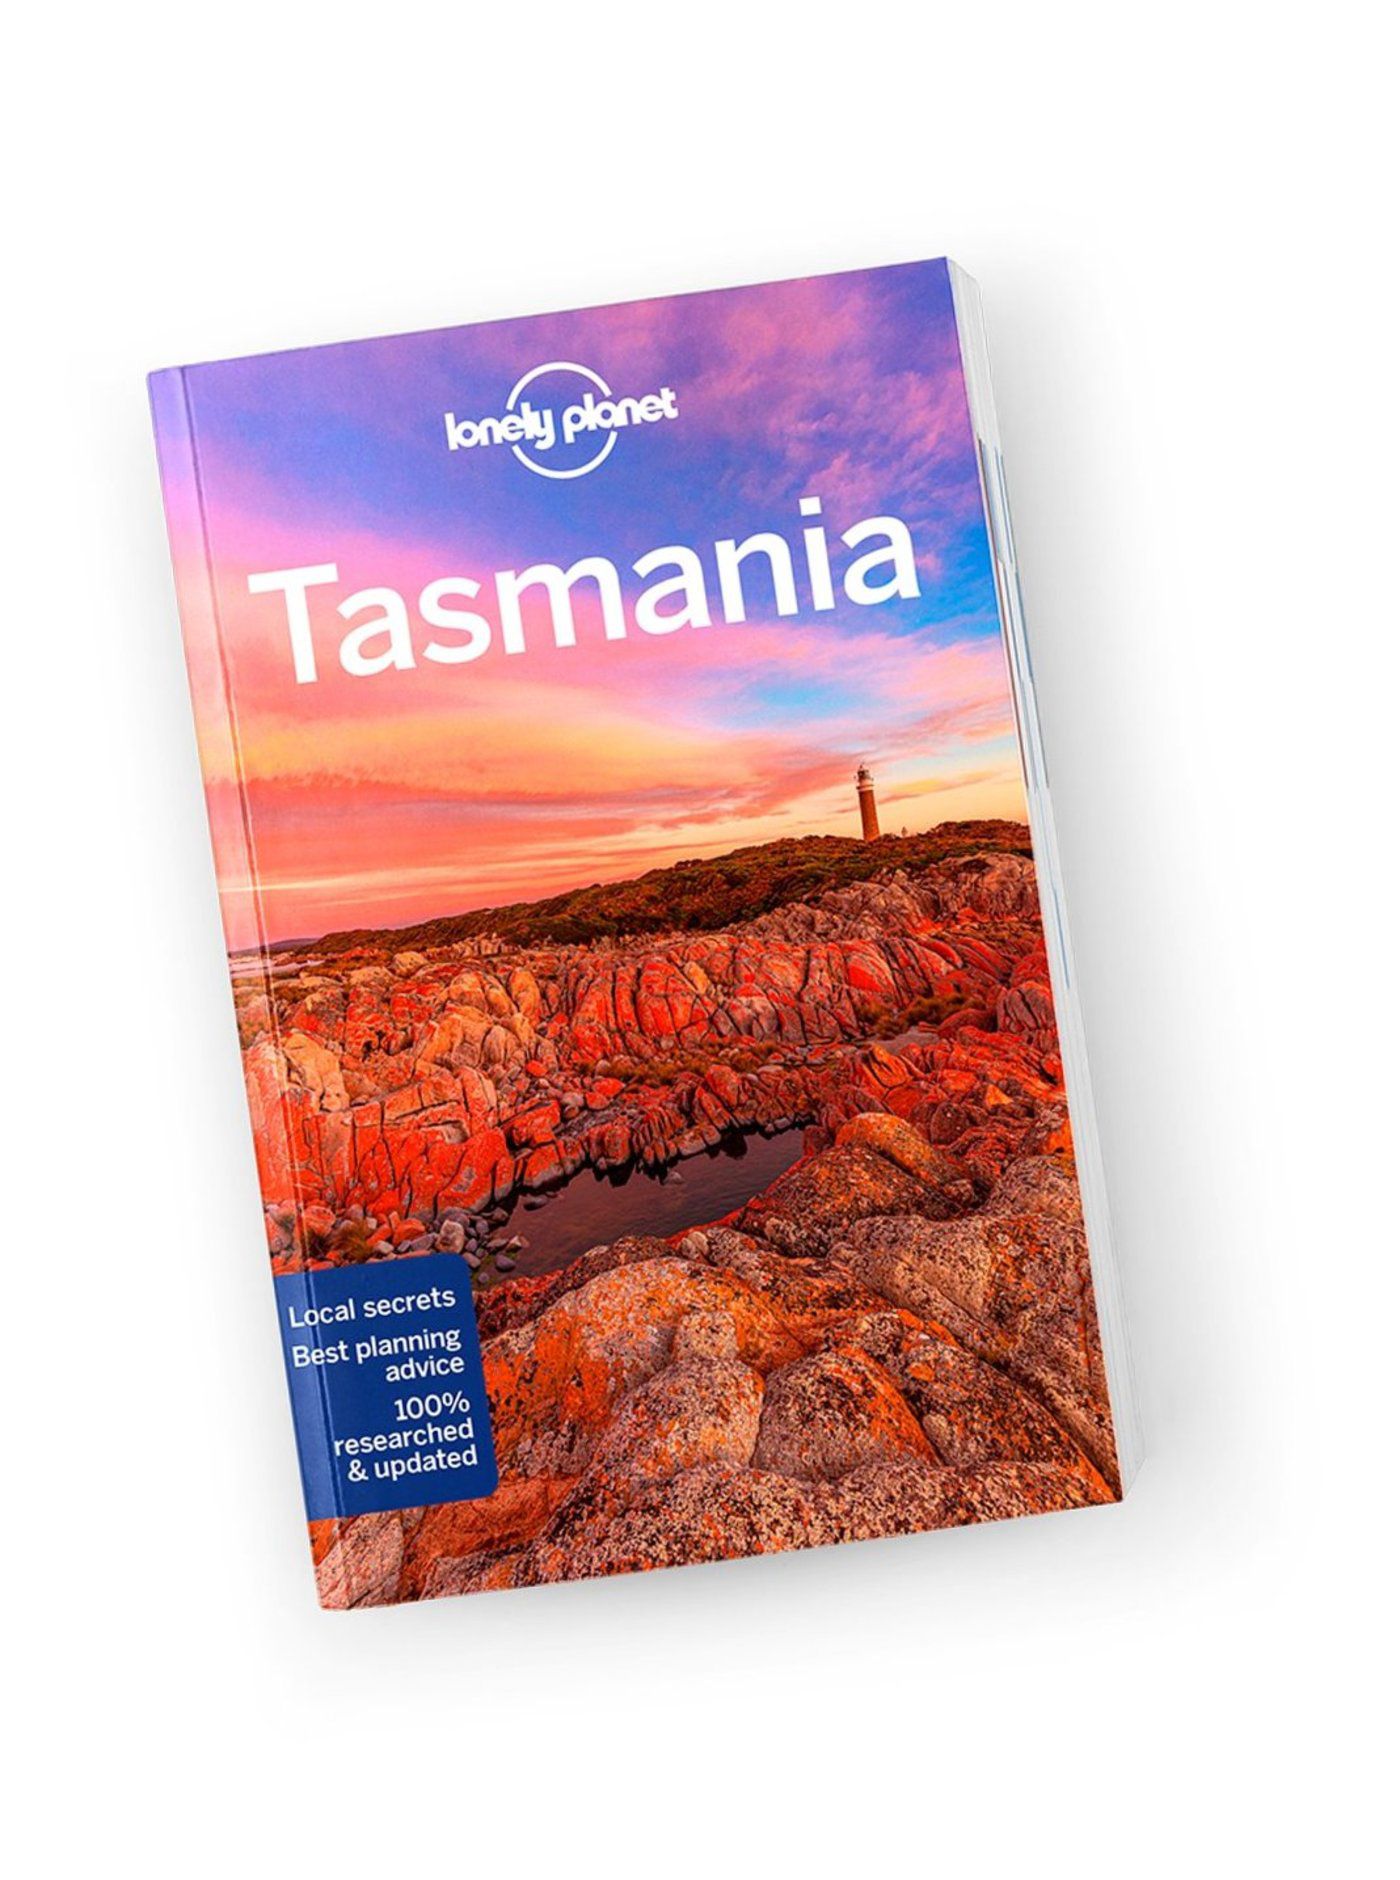 Lonely Planet: Tasmanian 9th Edition Travel Guide (Book) - Find Your Feet Australia Hobart Launceston Tasmania